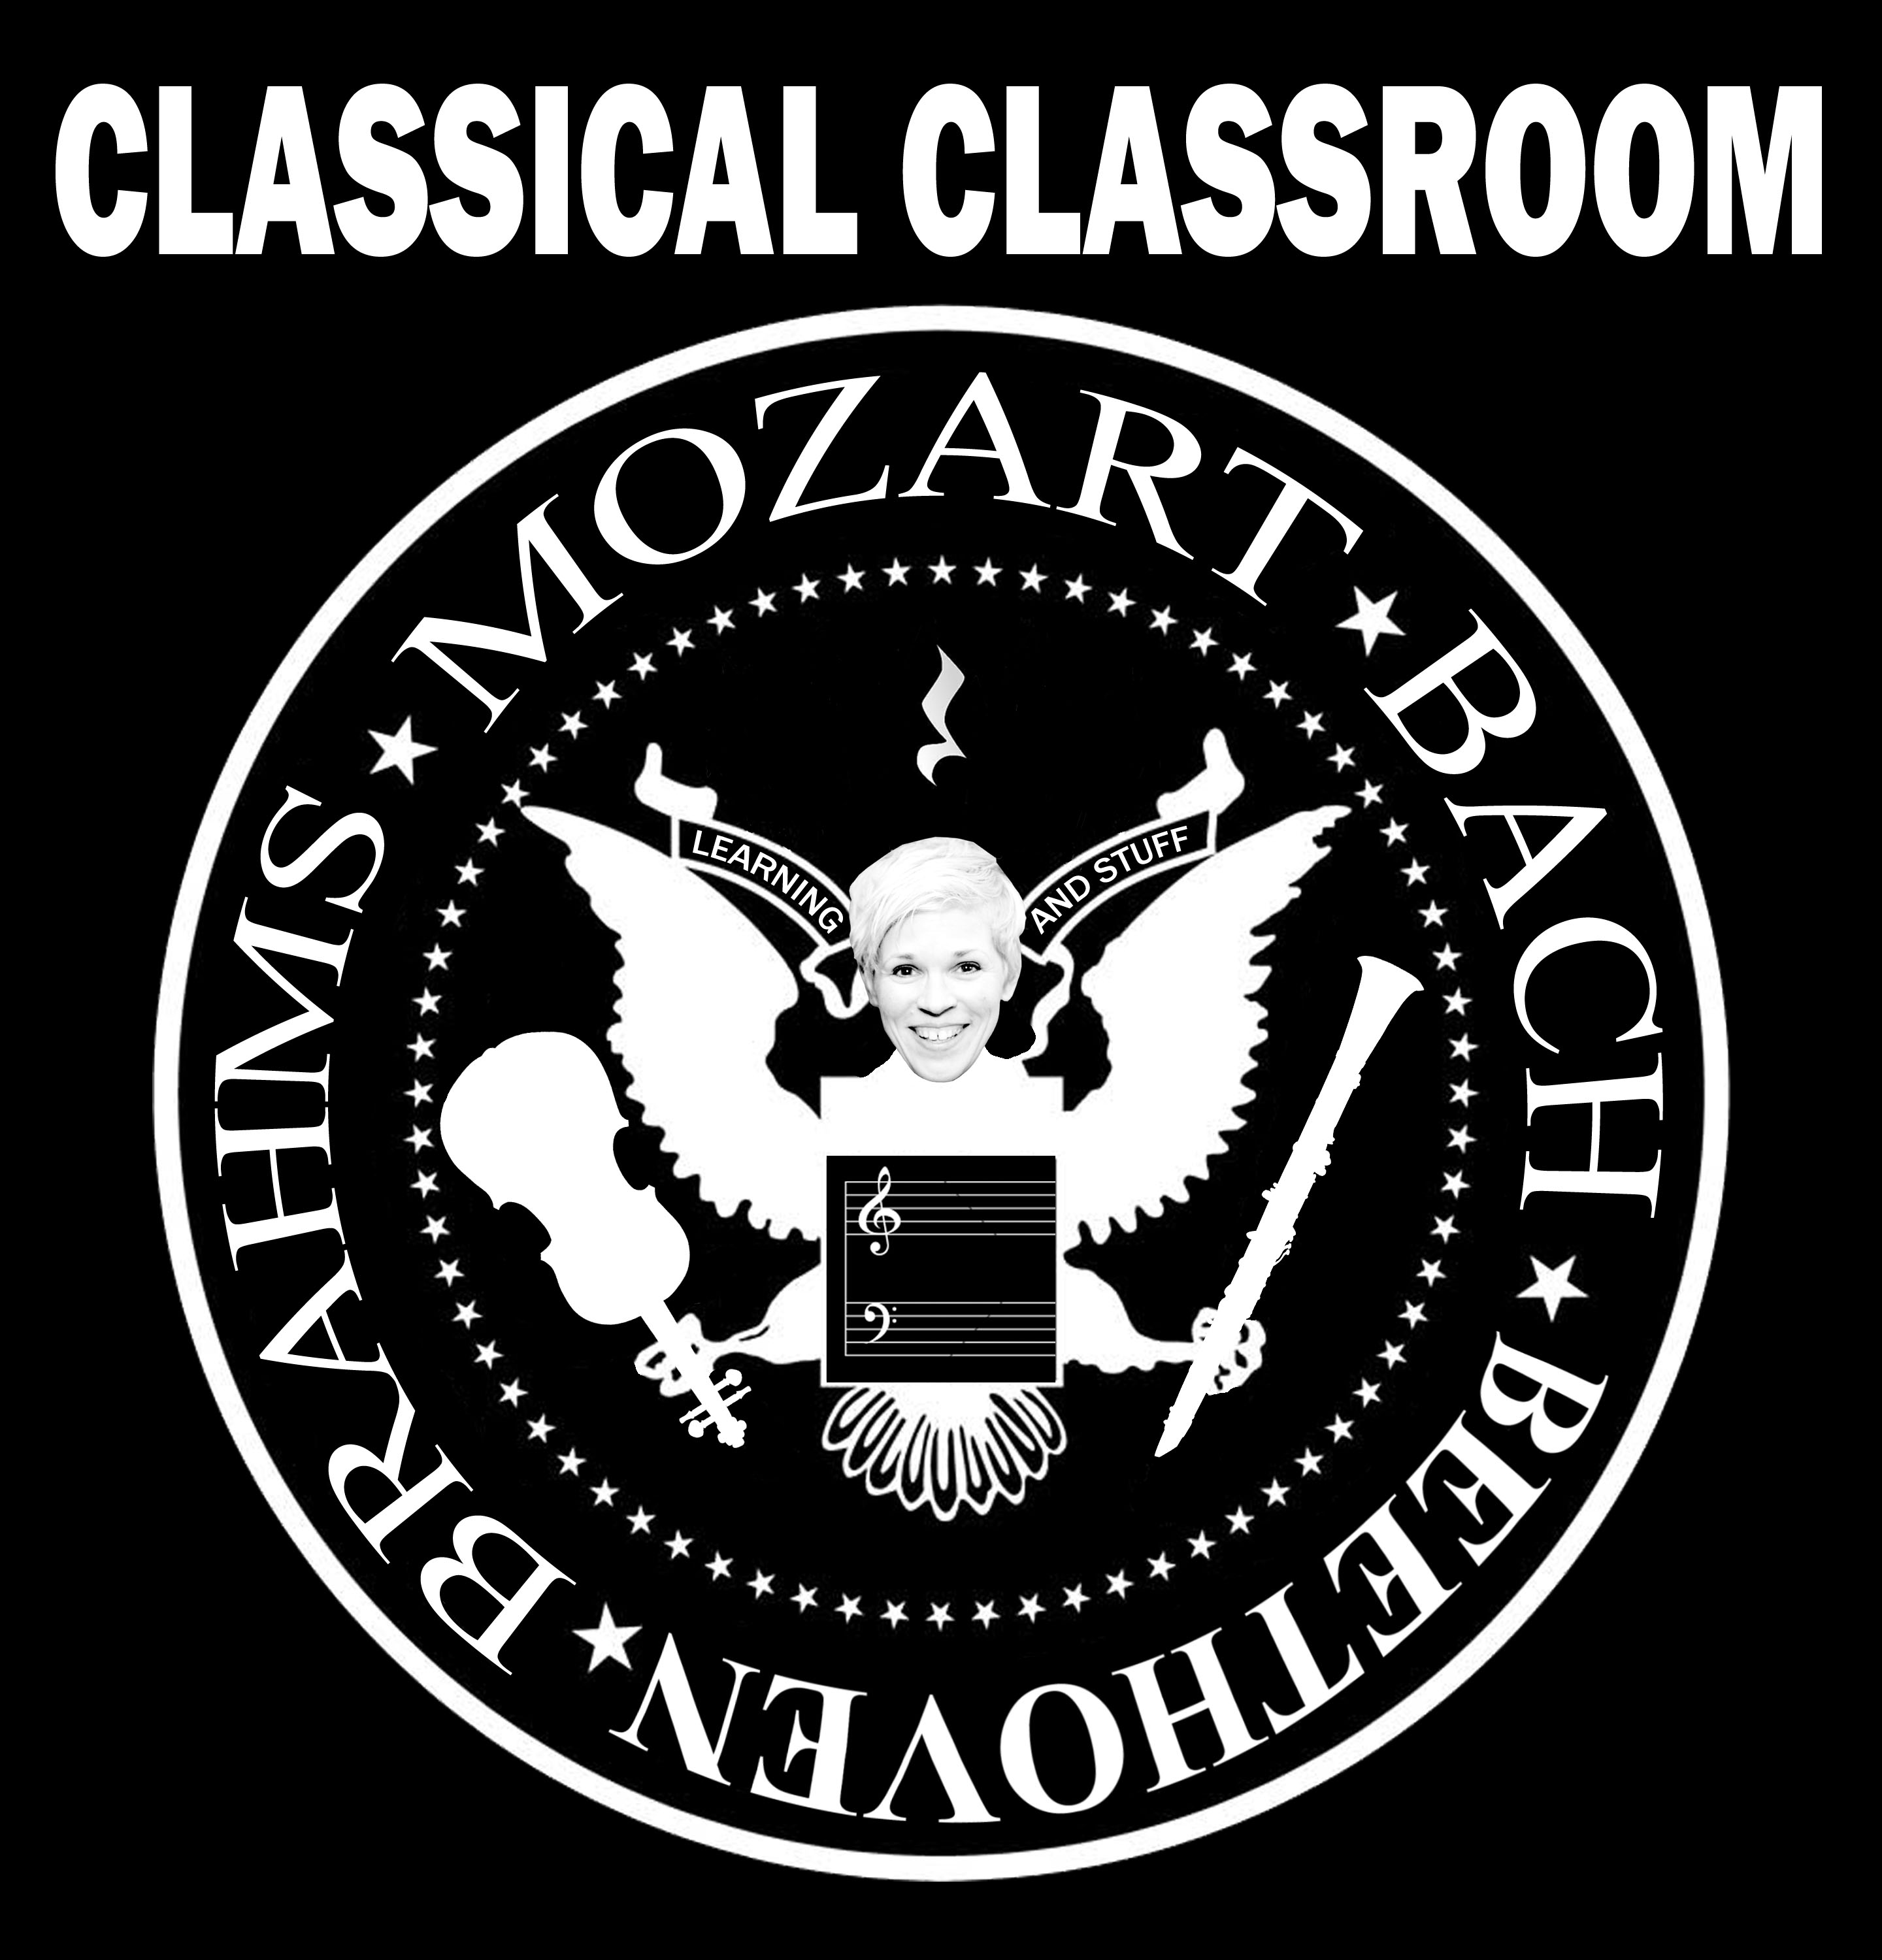 Classical Classroom logo